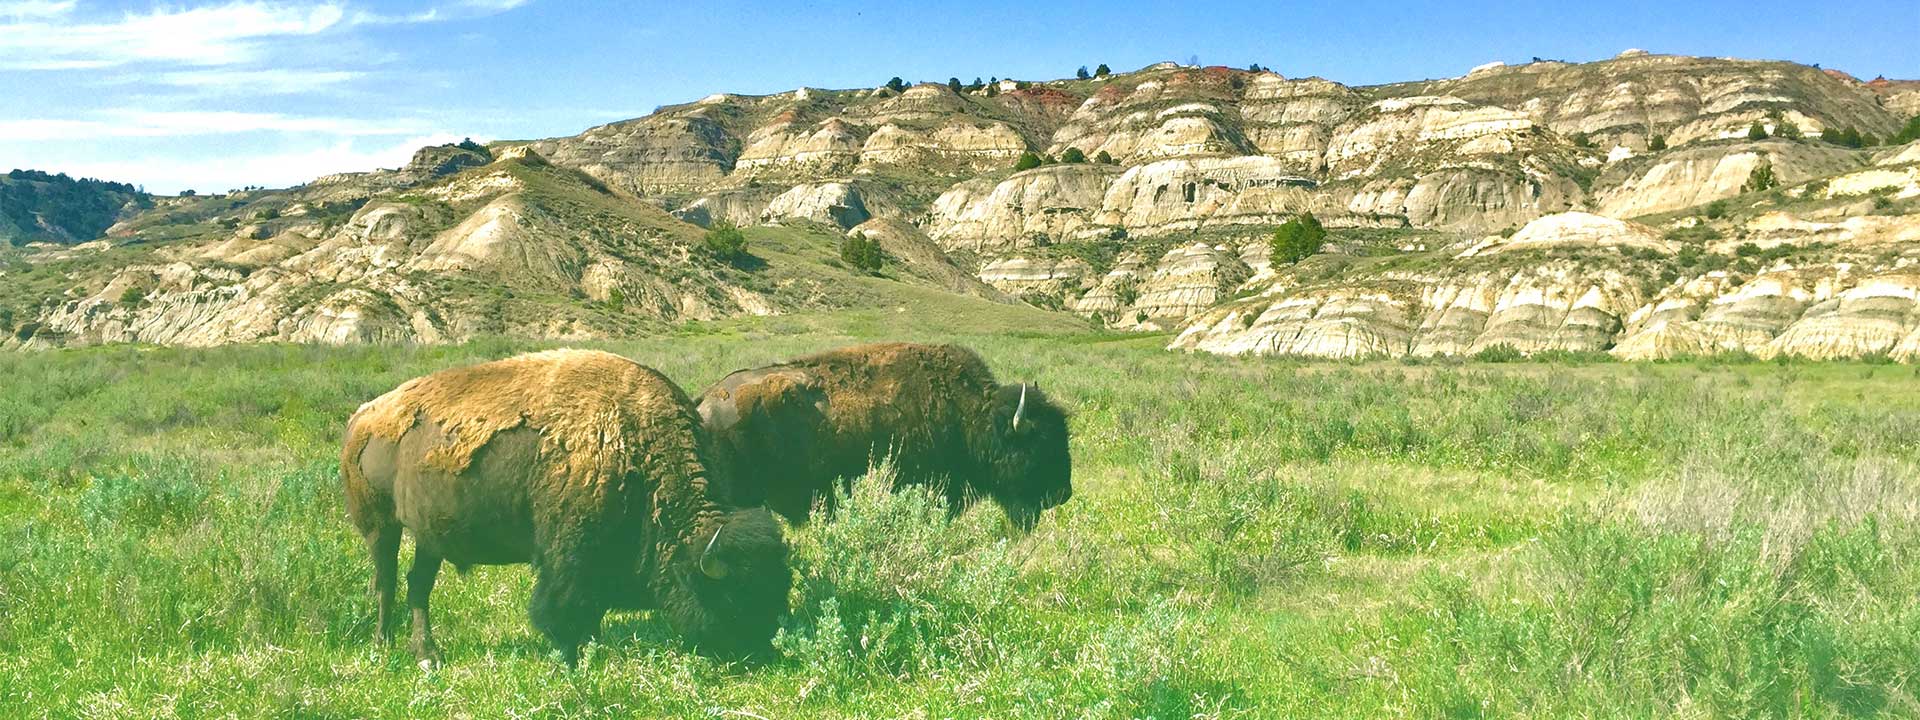 Two bison on a beautiful, lush landscape in North Dakota